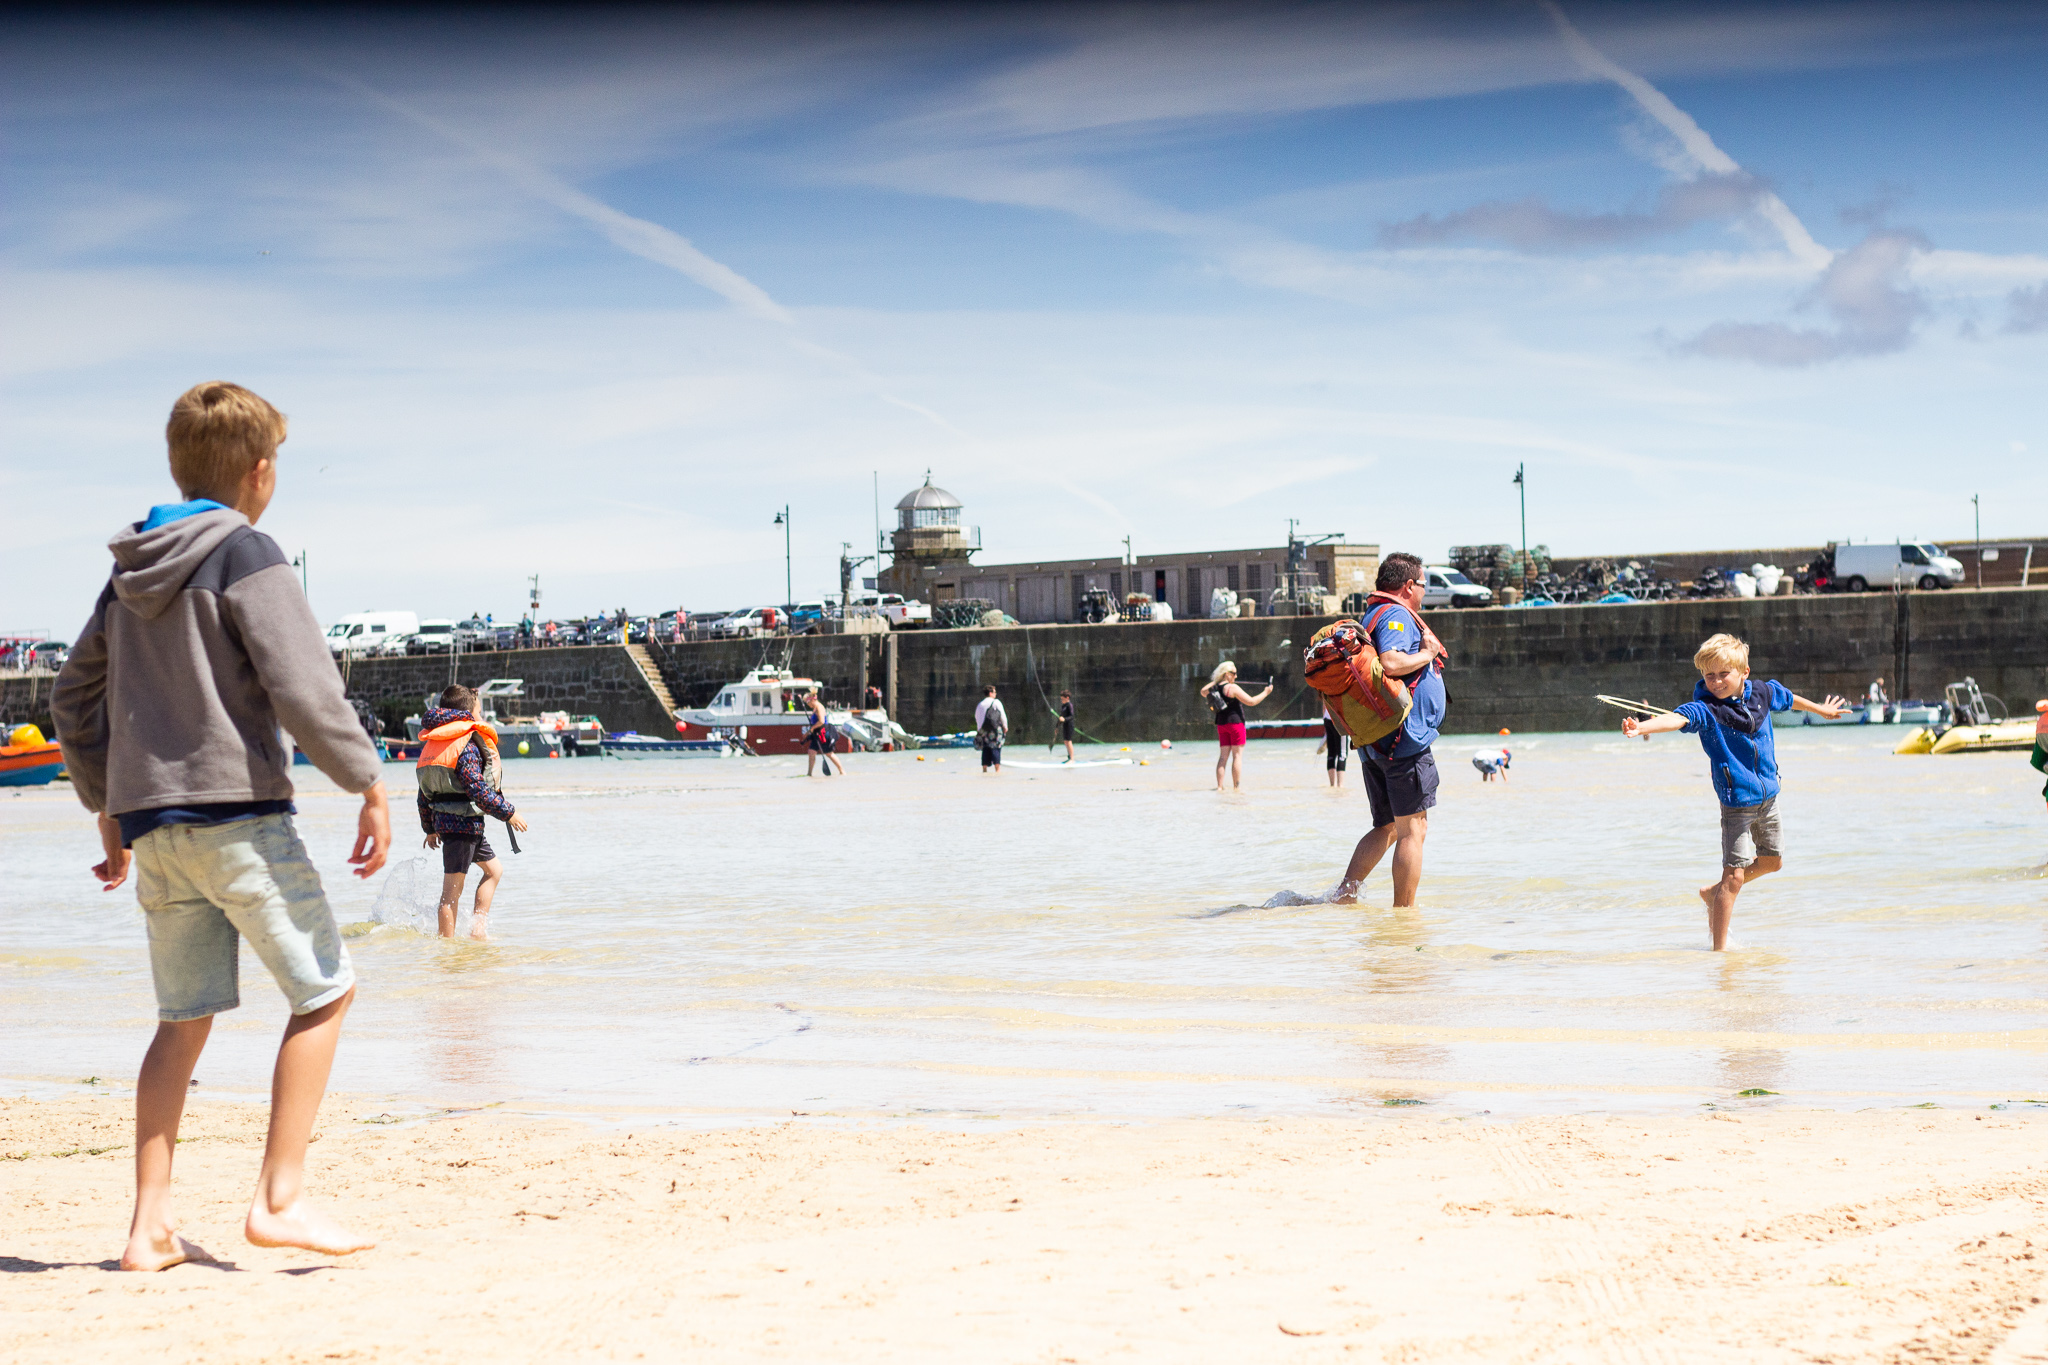 Frisbee on the beach……#sunshinenotscreentime